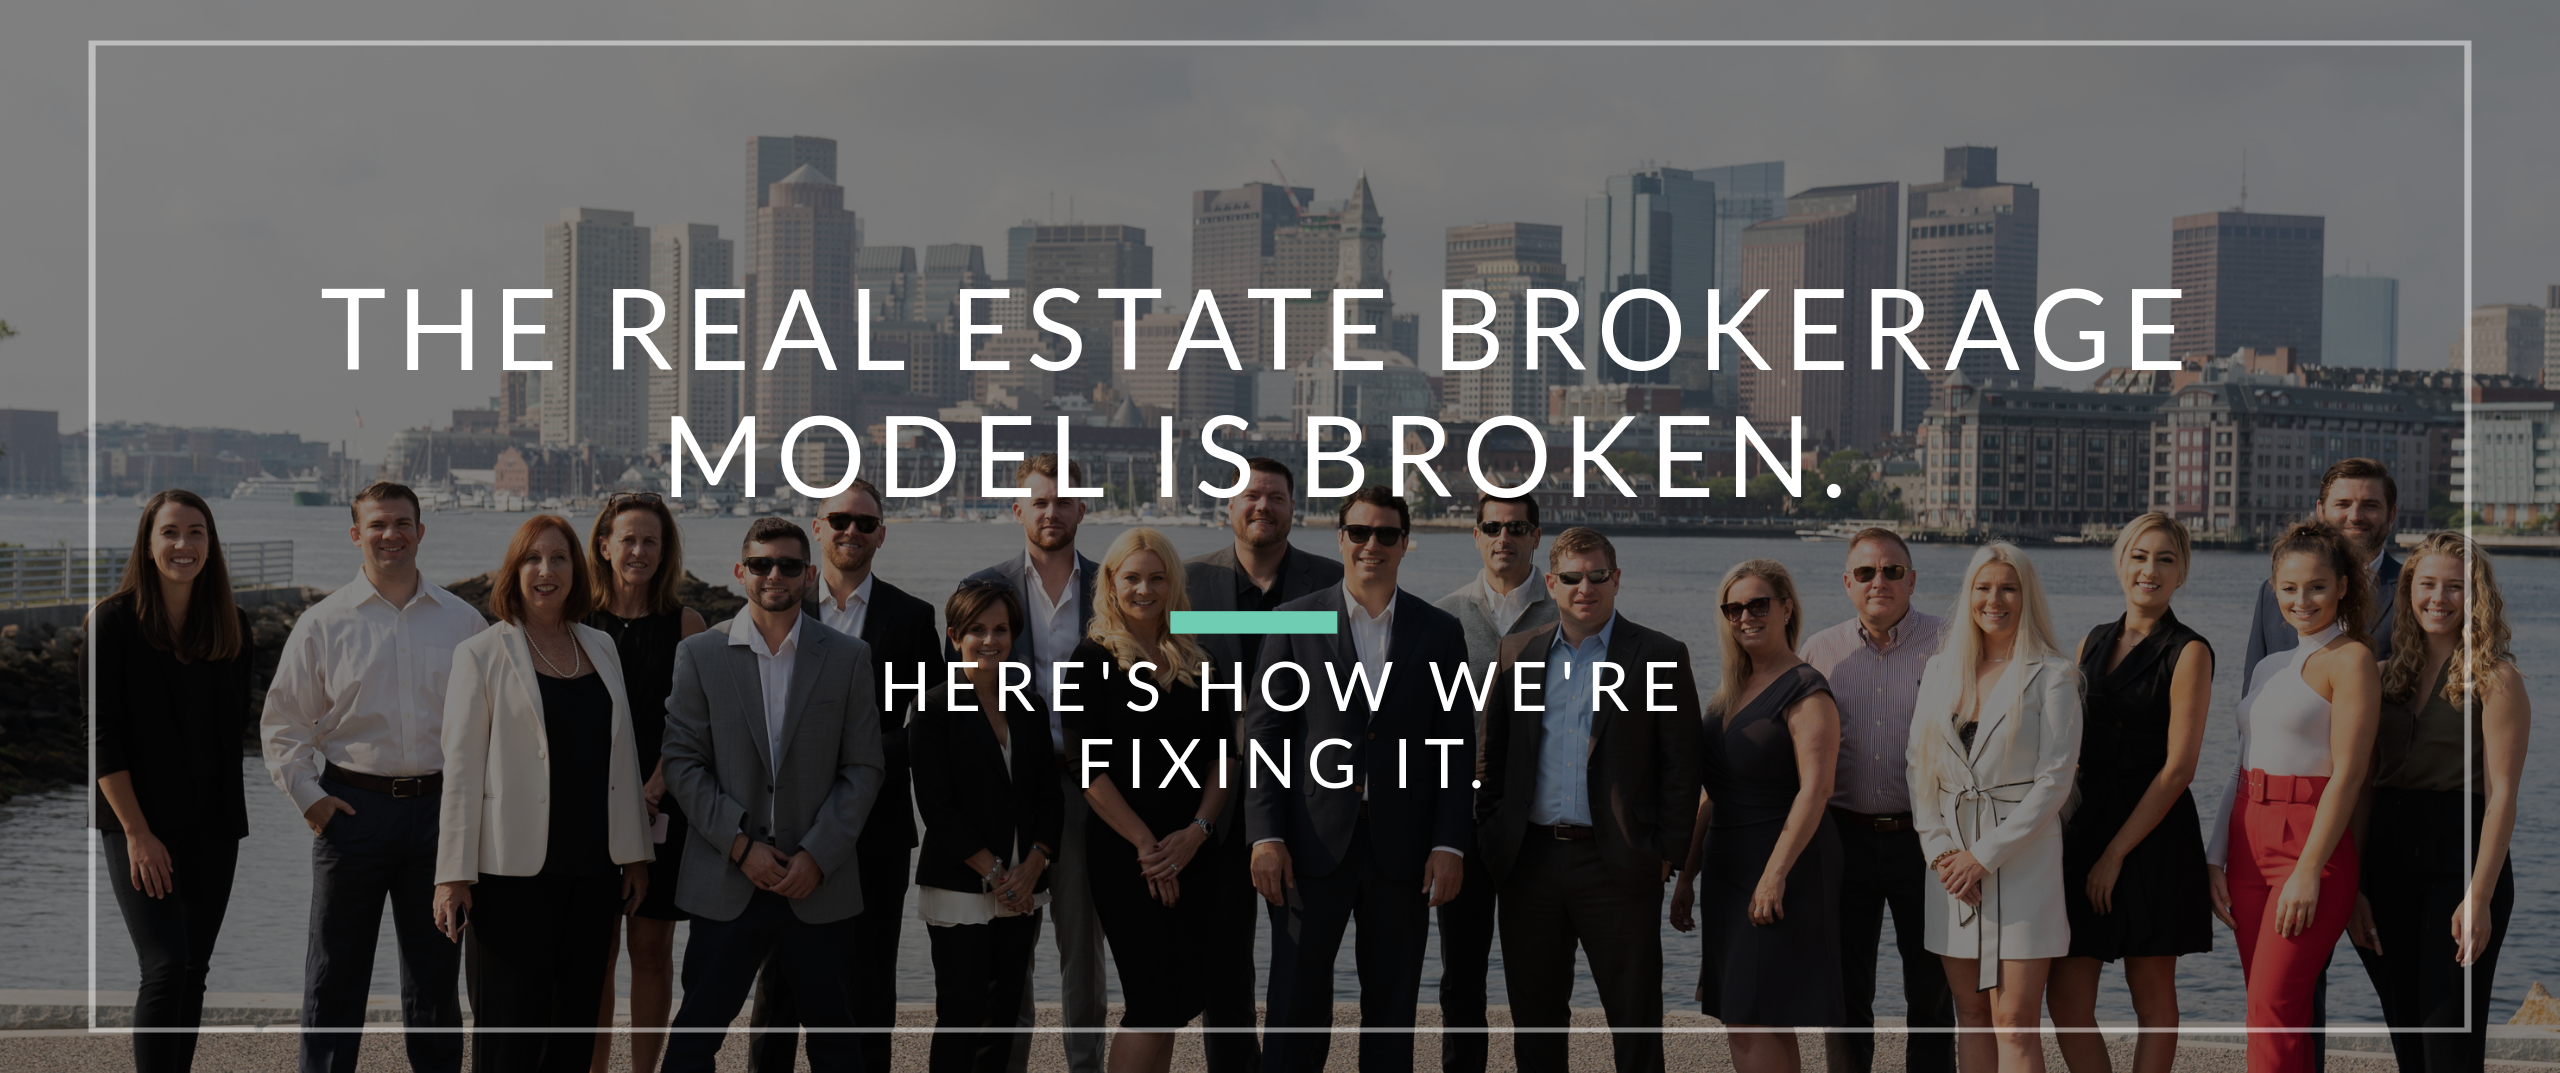 The Real Estate Brokerage Model Is Broken.